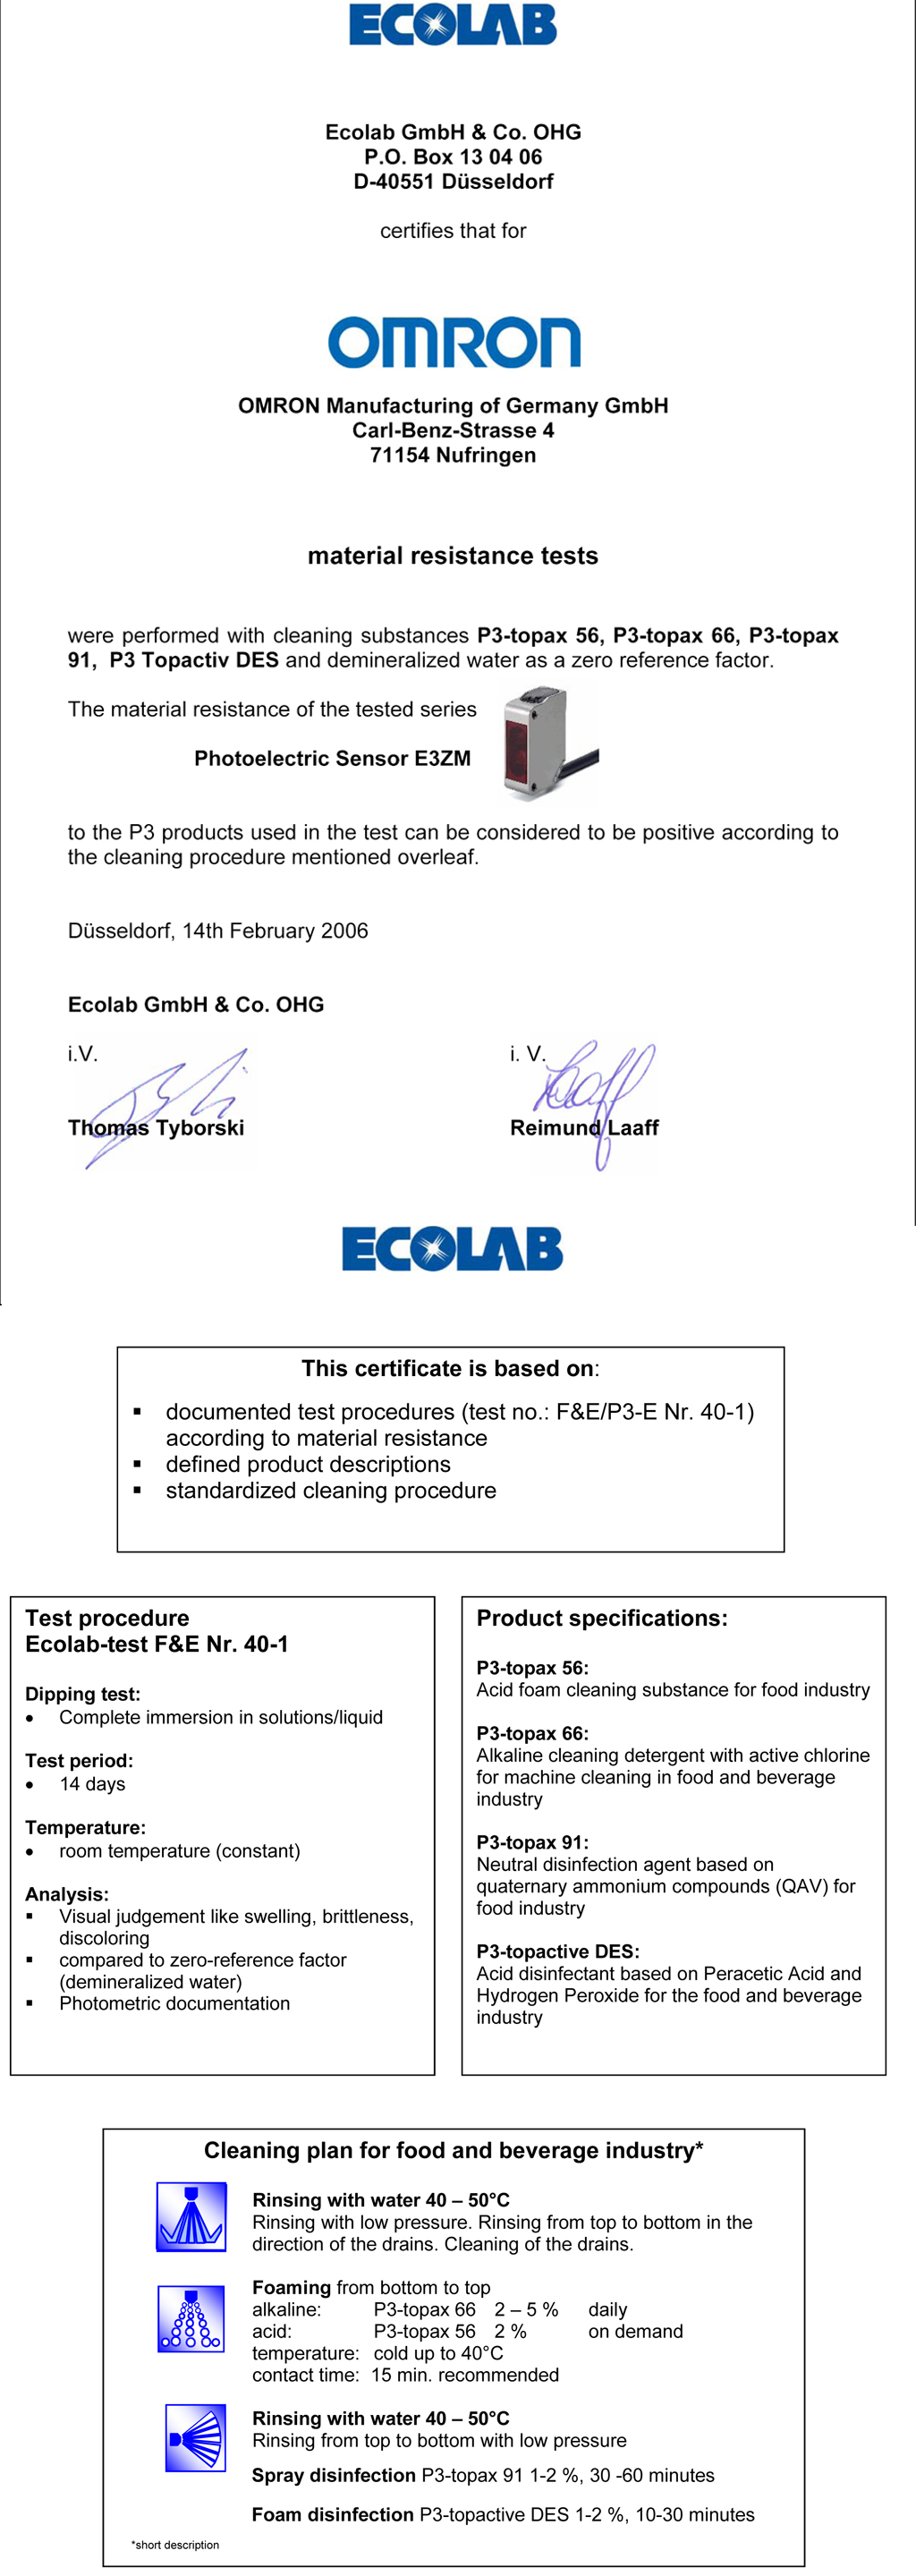 e3zm ecolab-2 prod